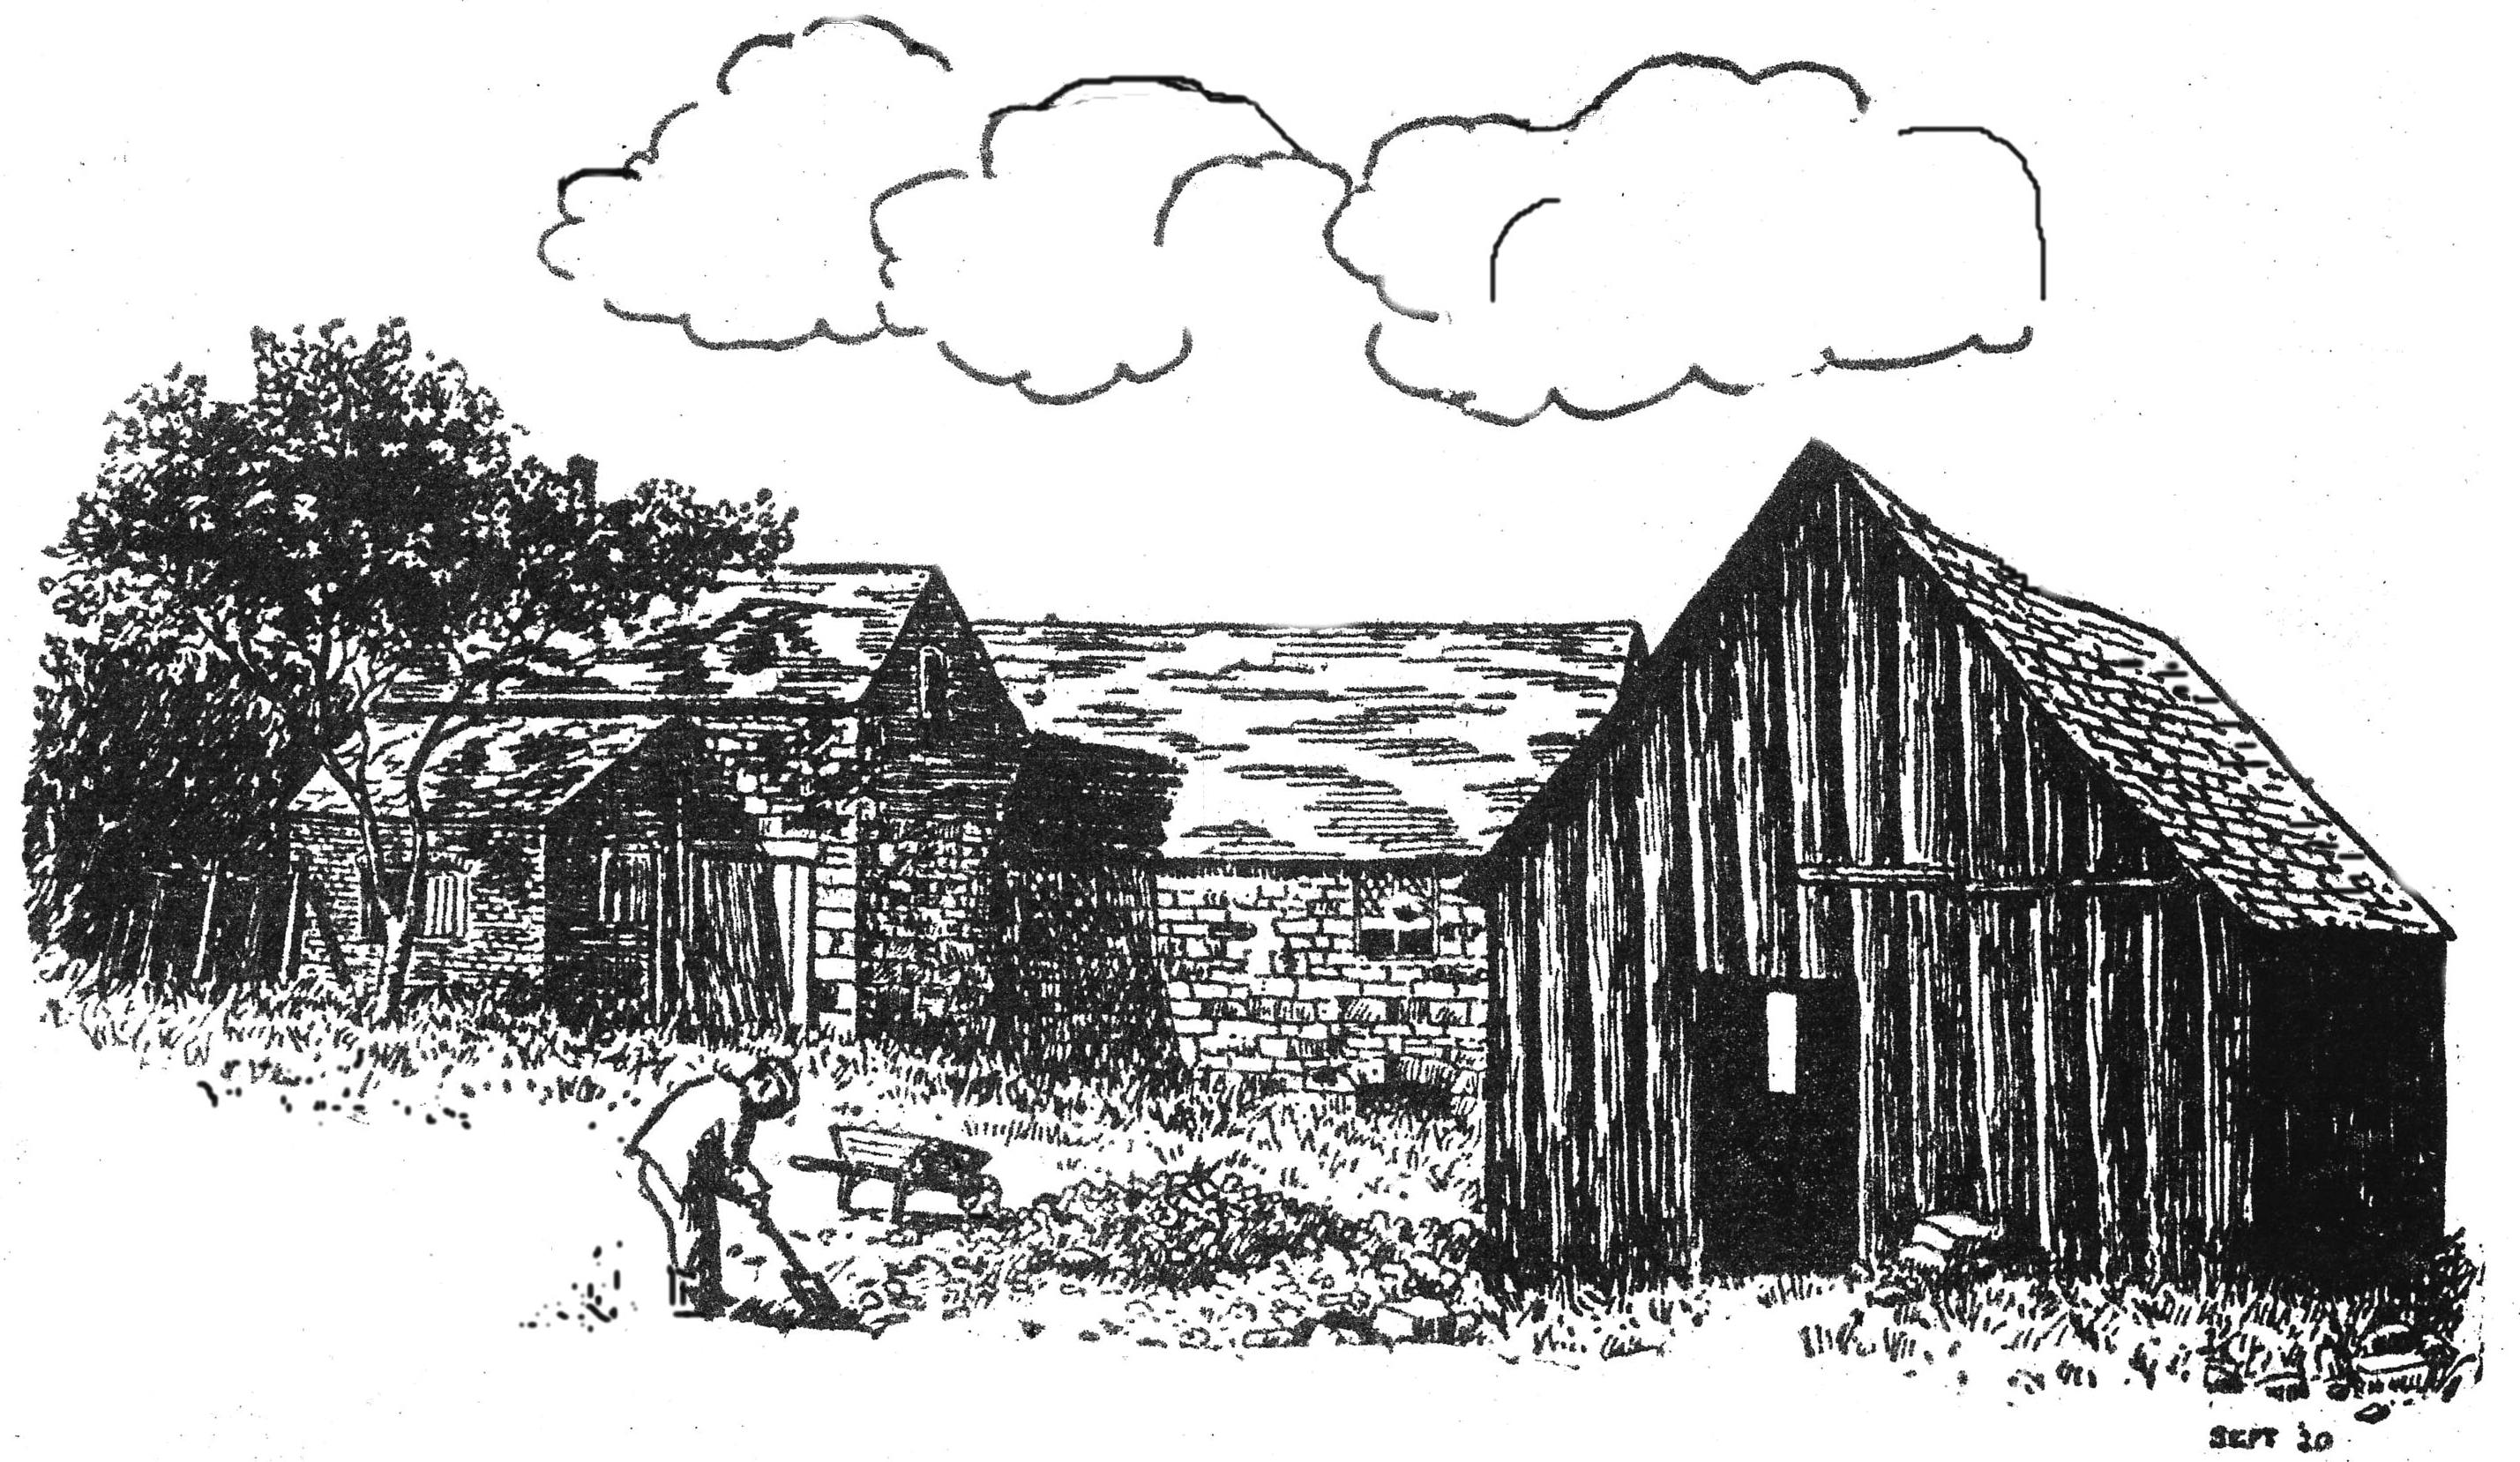 Barley_Lane_Farm_Sept_1920_-_Copy.jpg